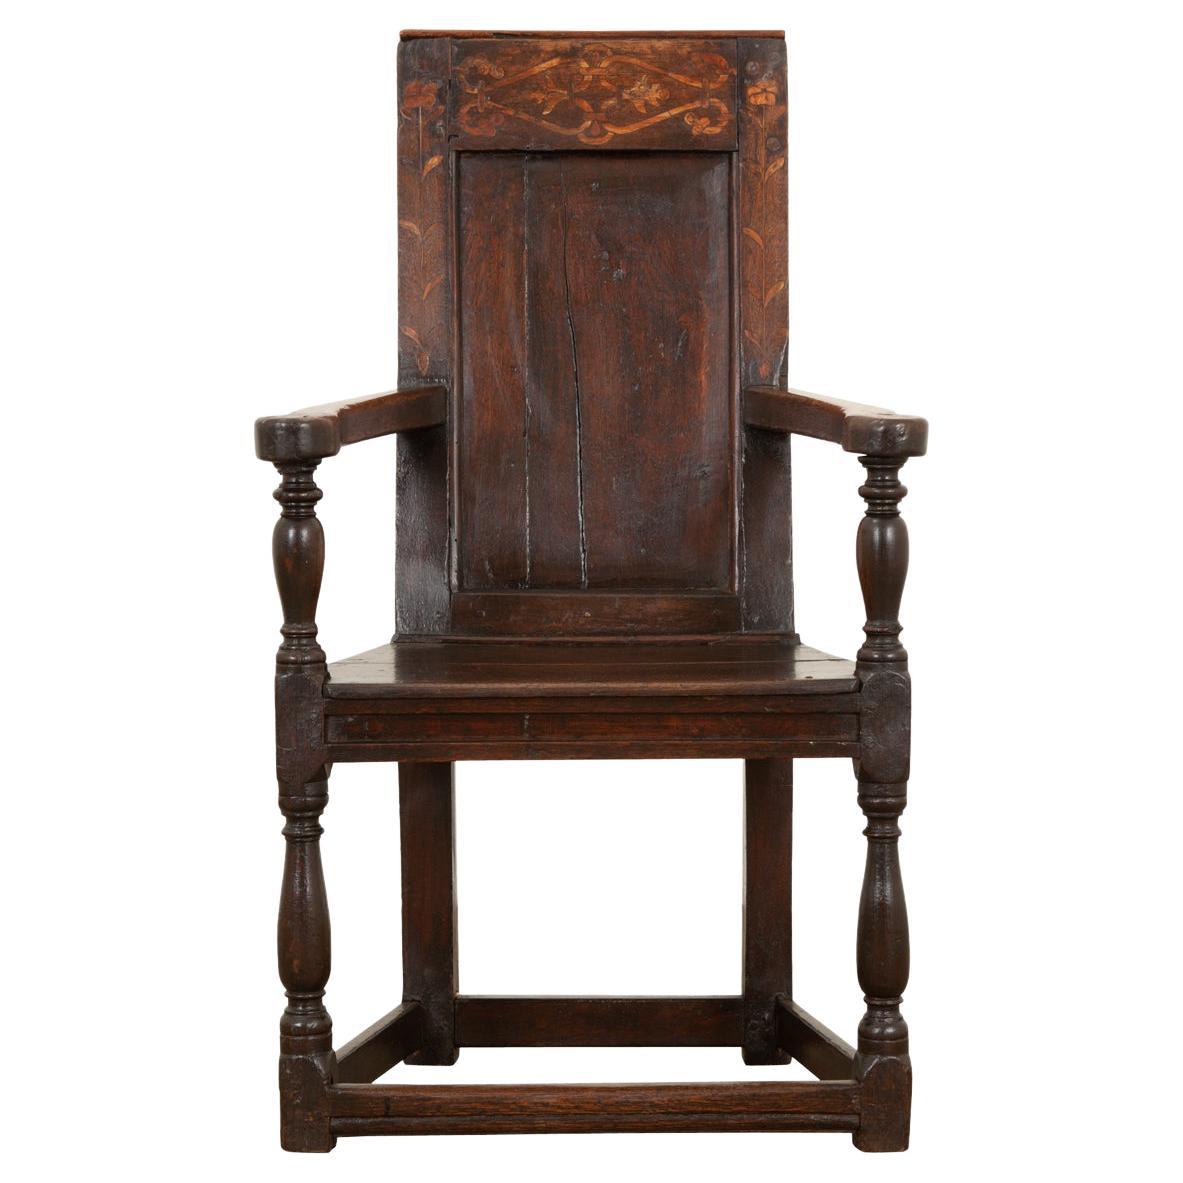 Chaise Wainscot anglaise en chêne du 18ème siècle